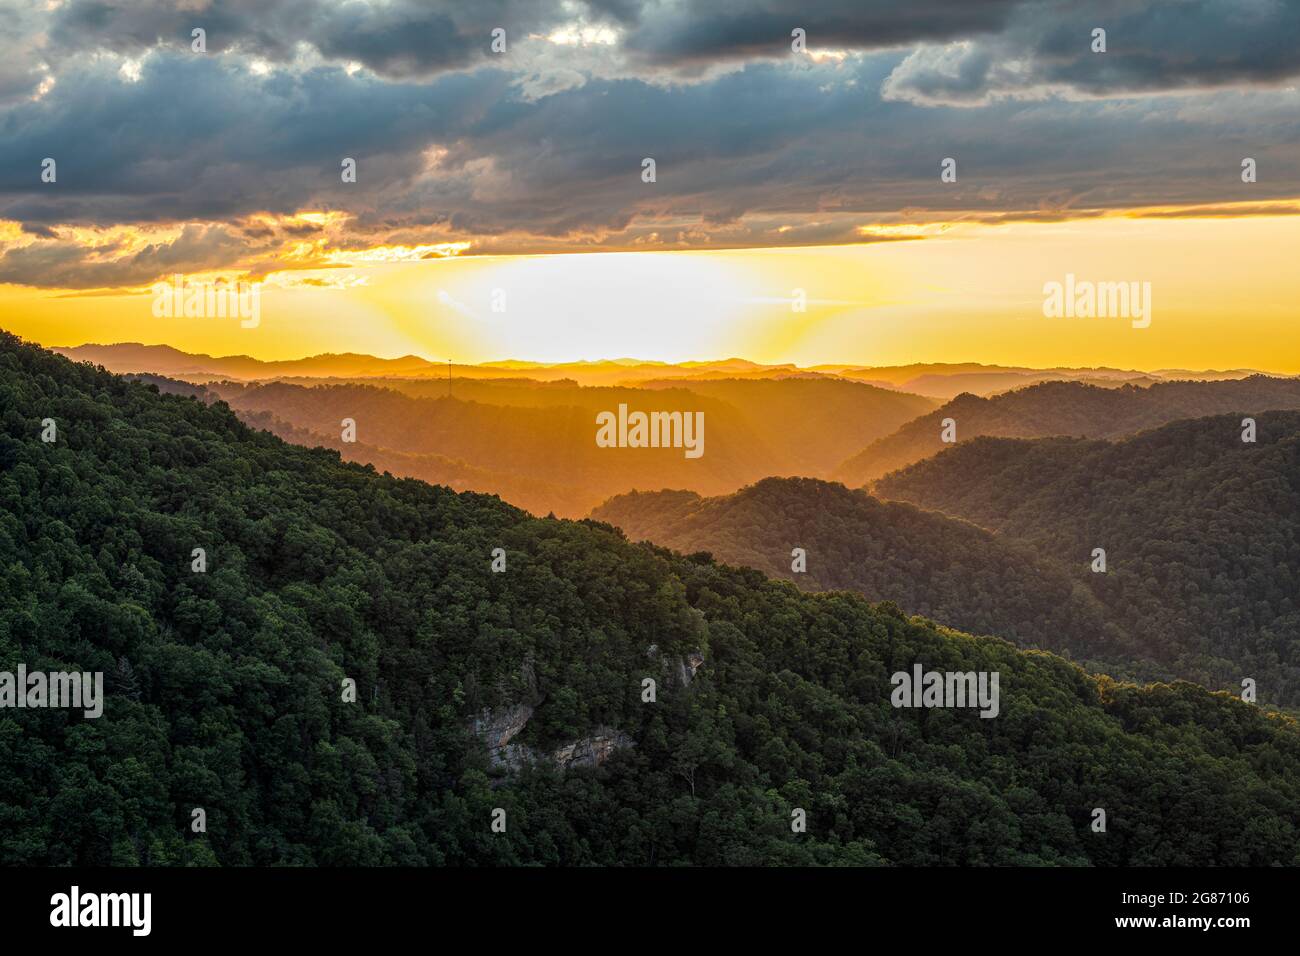 Sunrise in Central Appalachia. Stock Photo